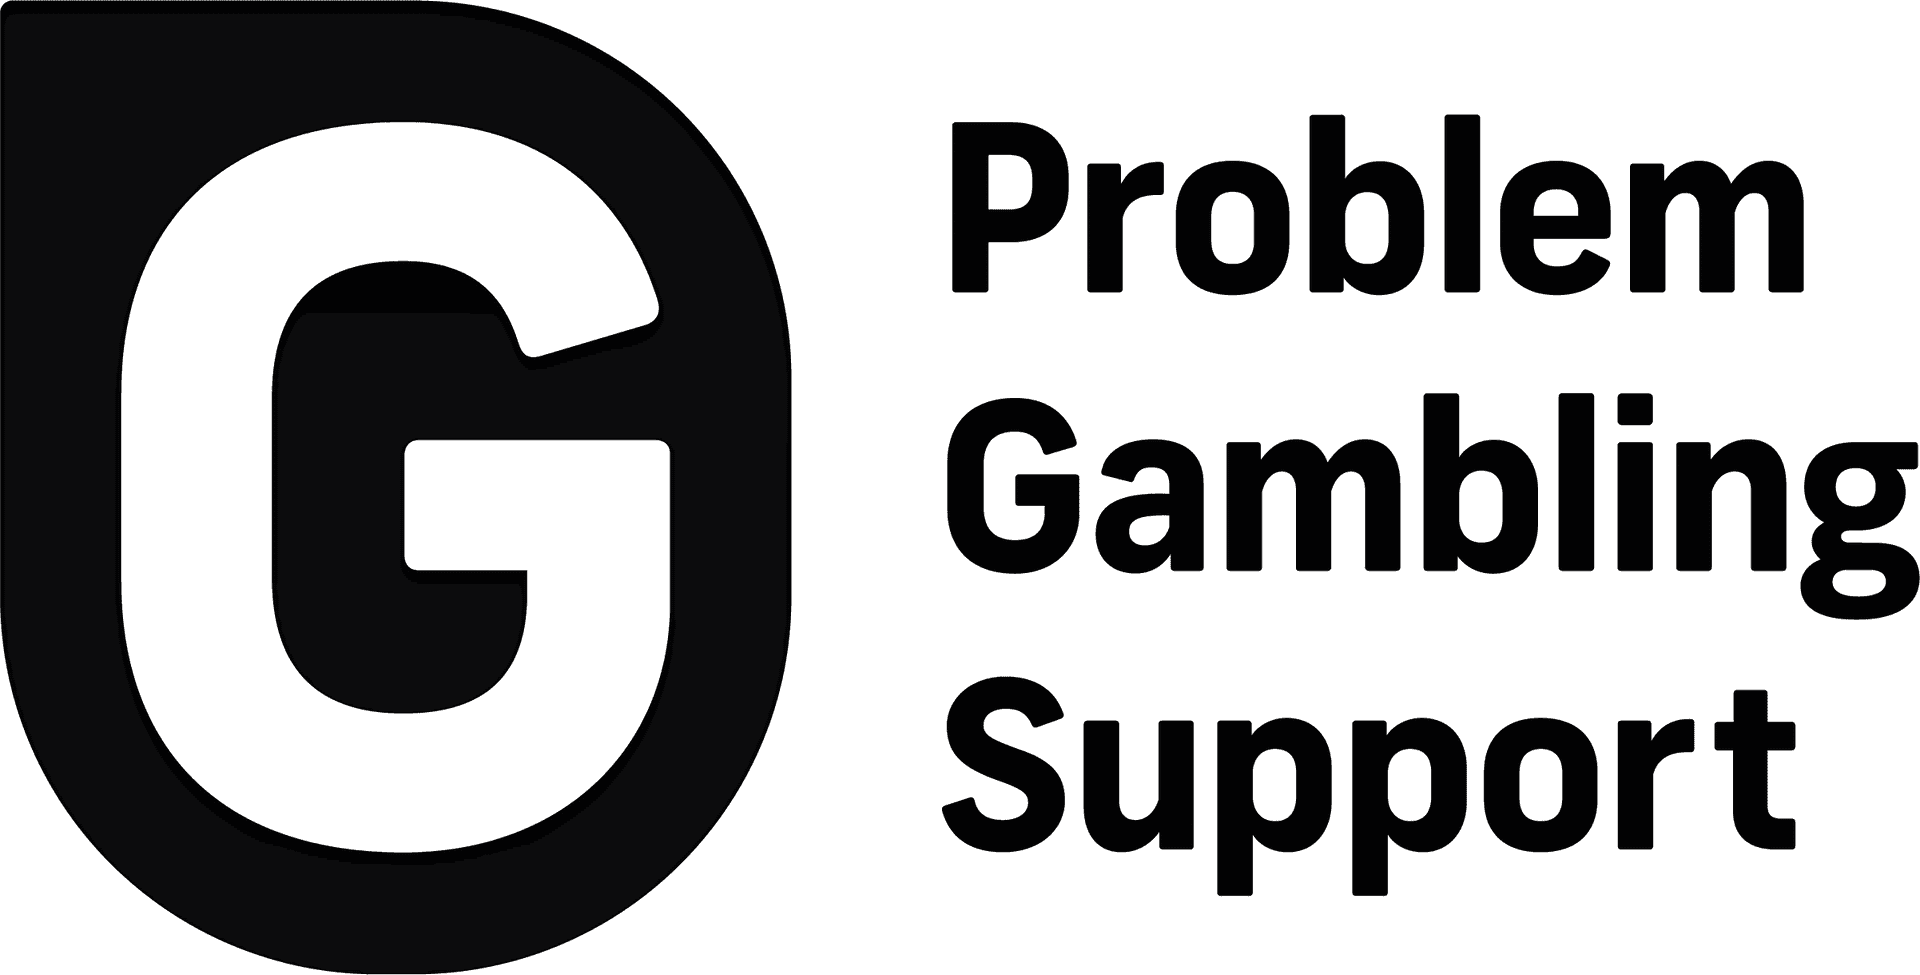 Problem Gambling Support Logo PNG image